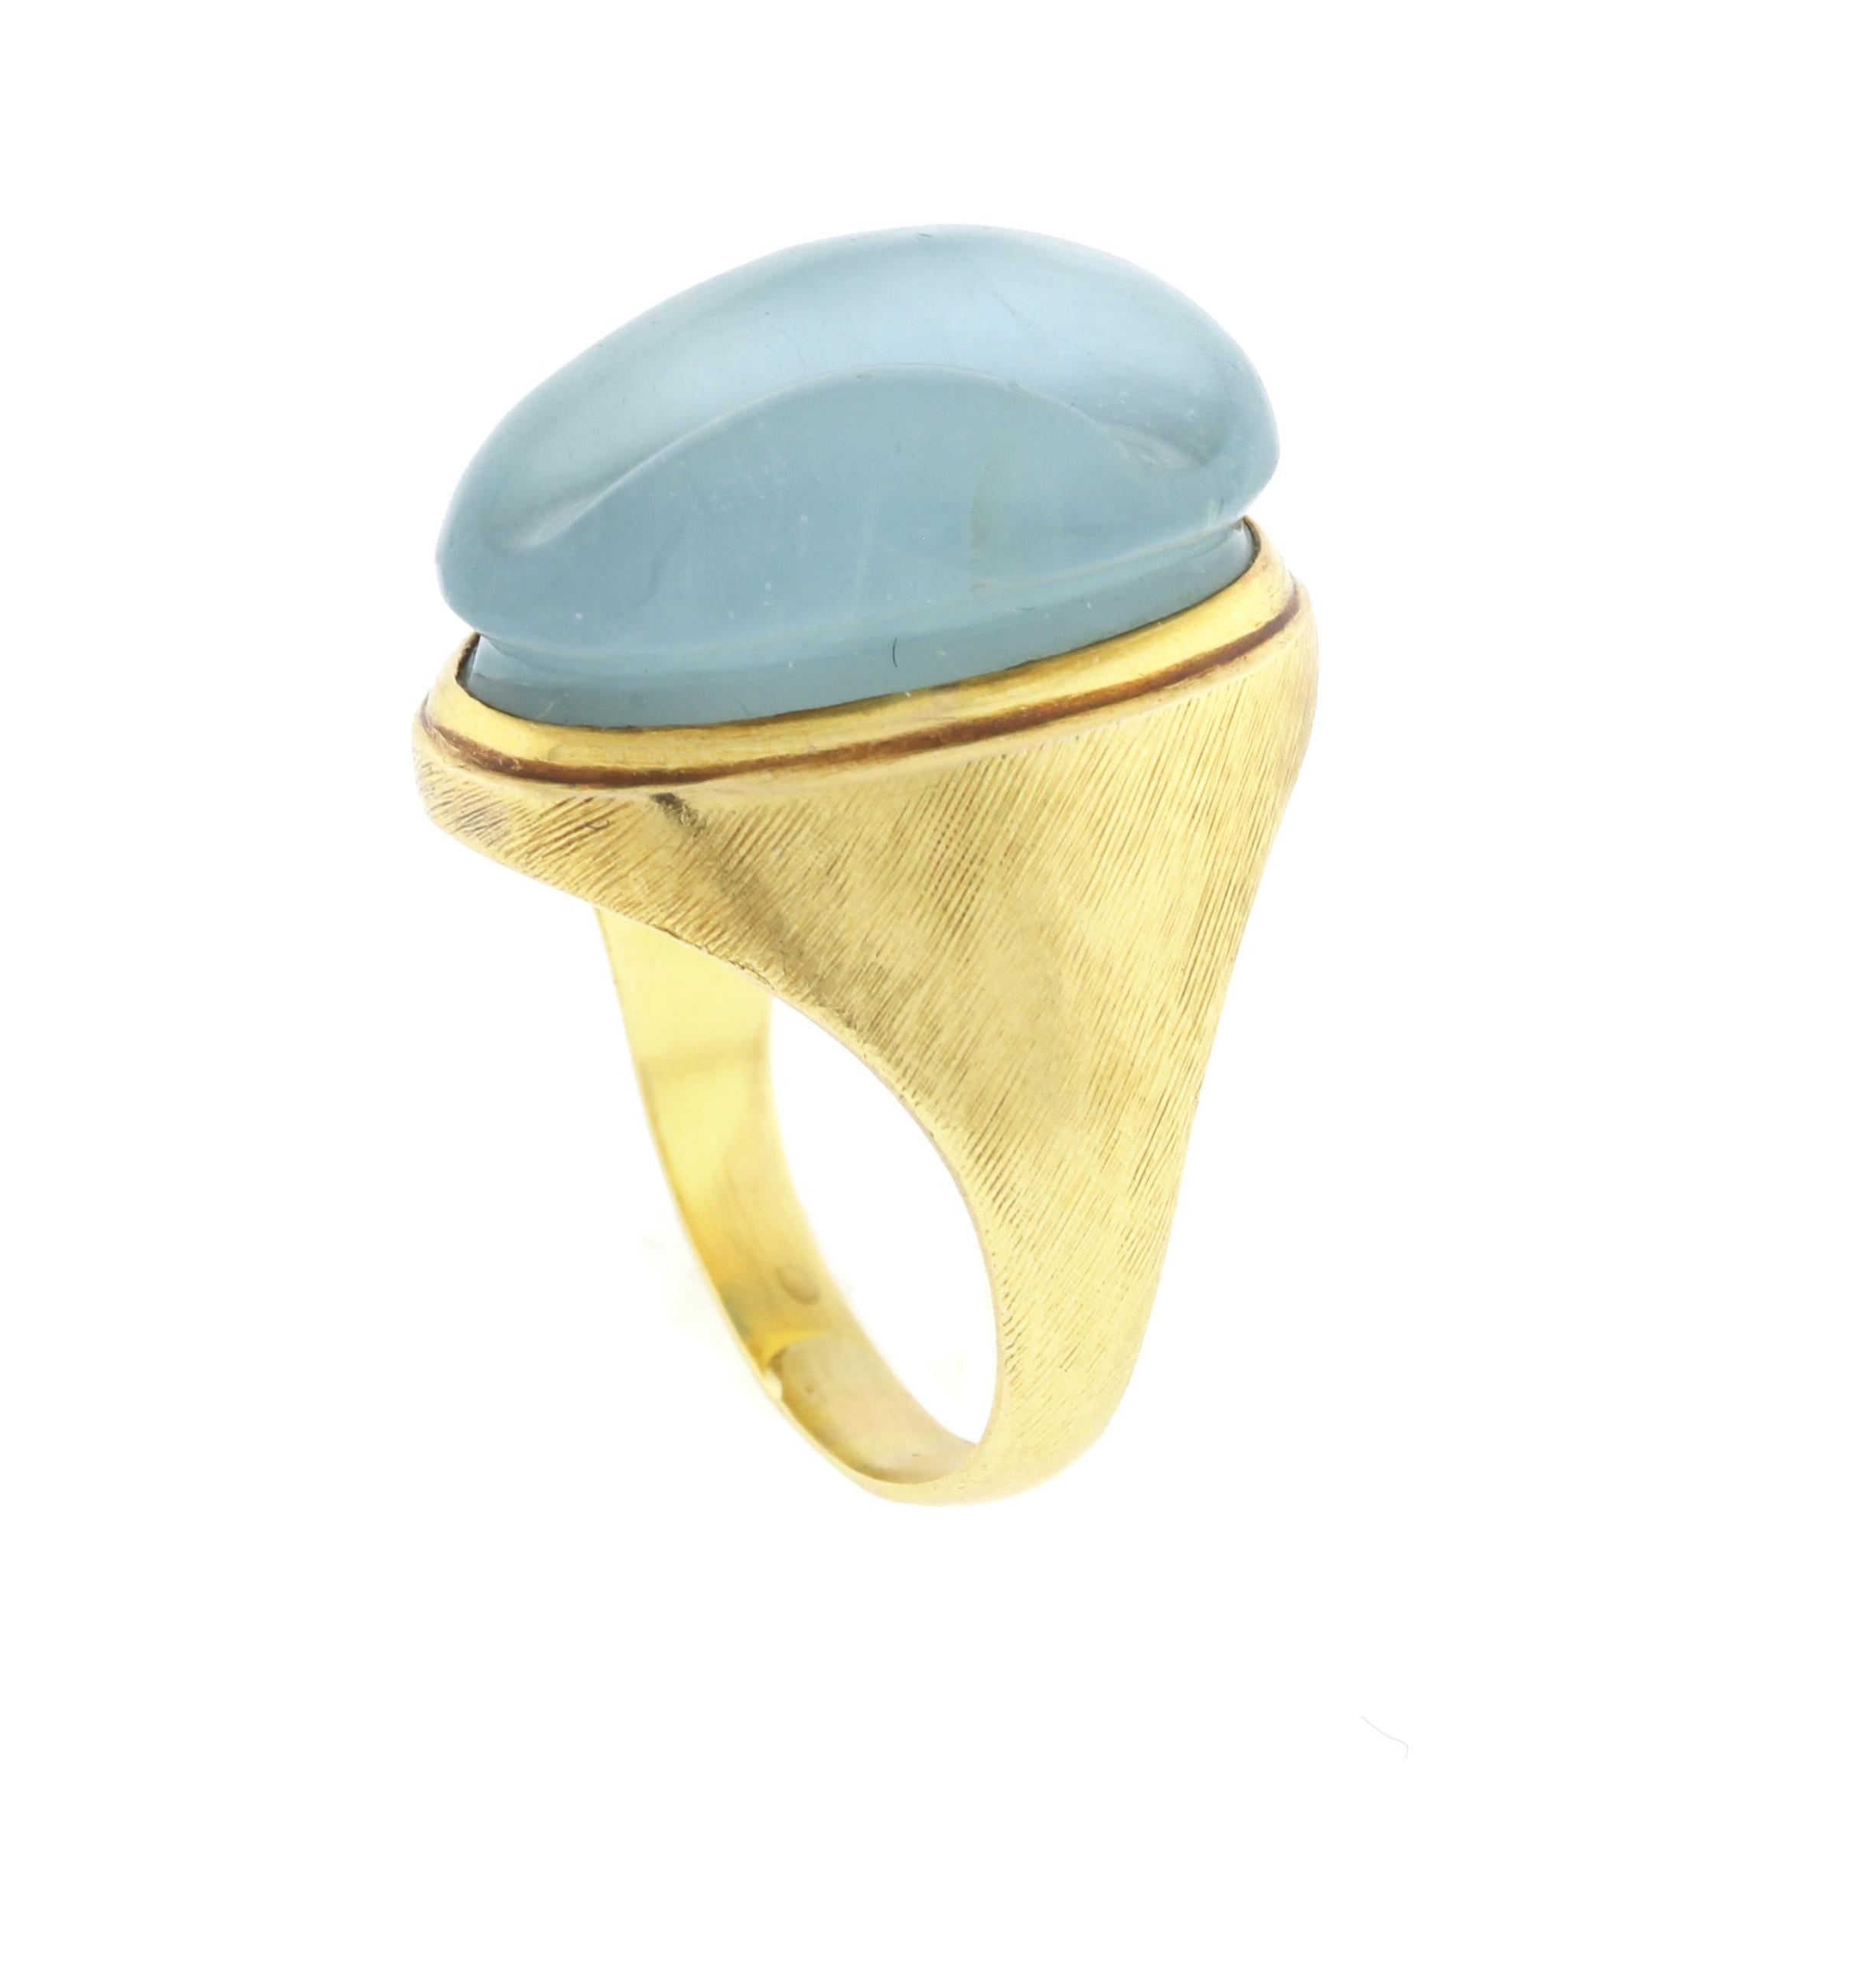 Tumbled Burle Marx Aqua Forma Livre Ring For Sale